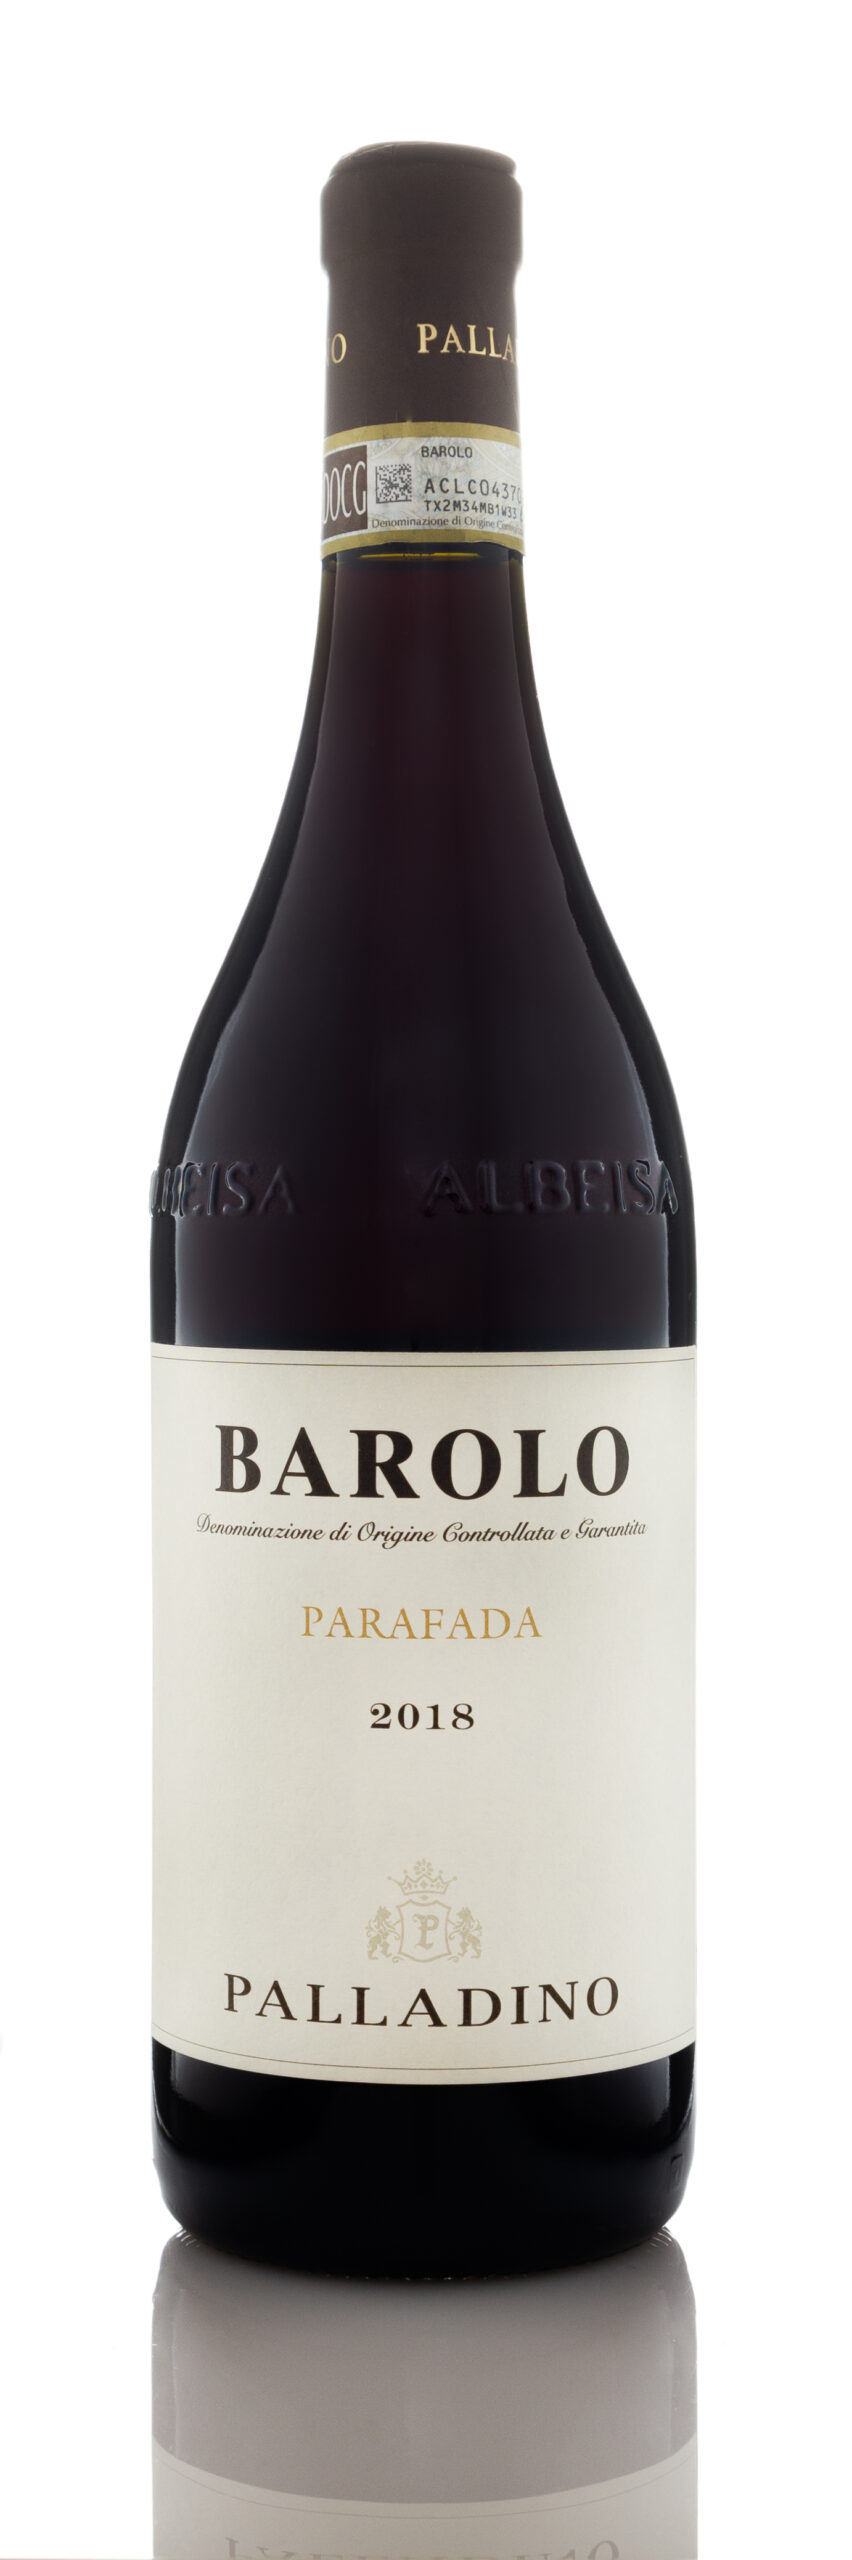 2018 Palladino Parafada, Barolo DOCG